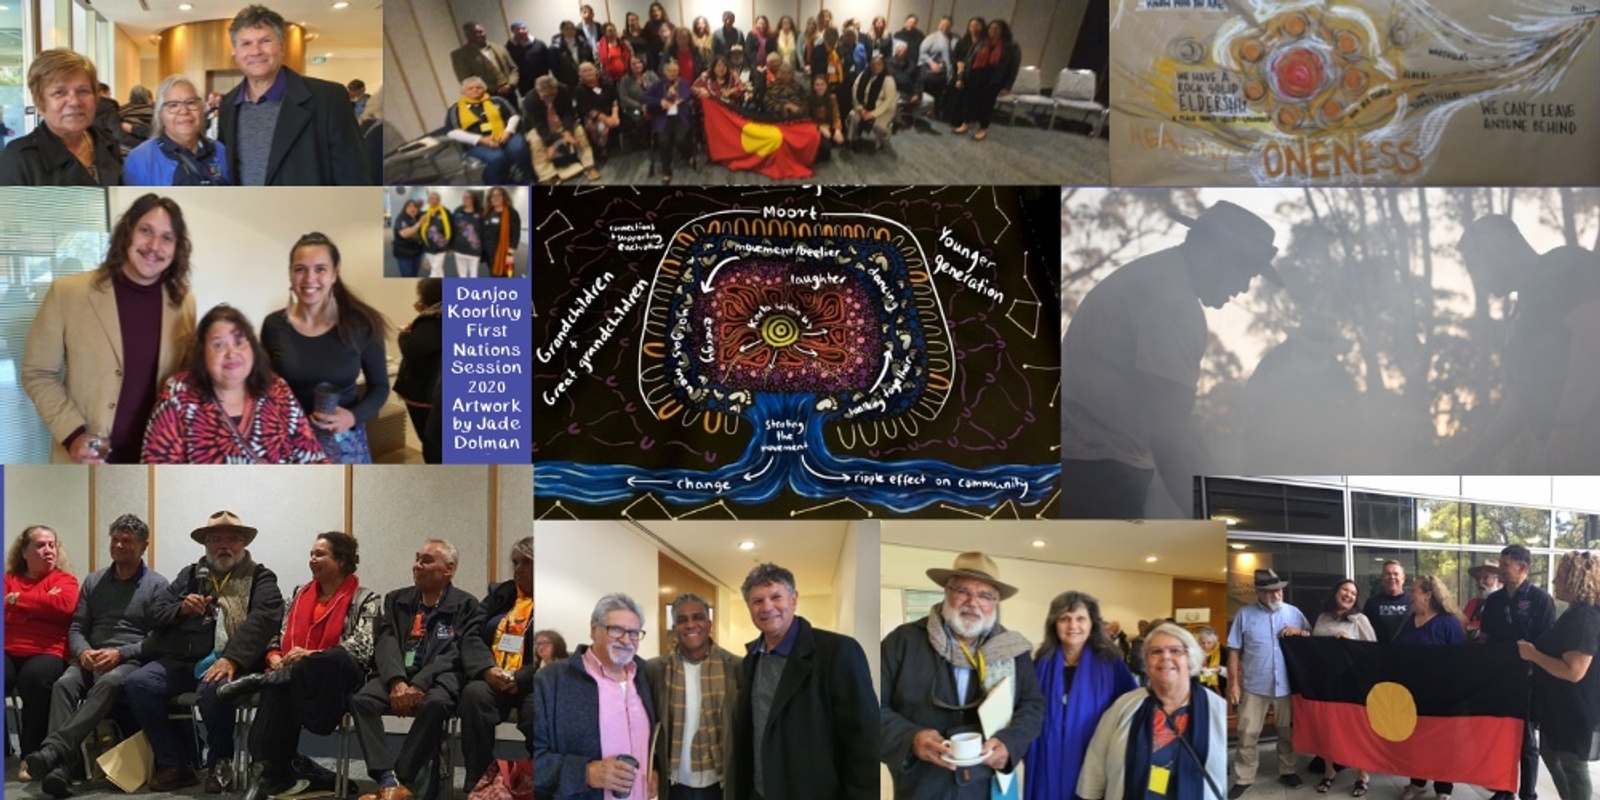 Danjoo Koorliny Aboriginal and Torres Strait Islander Session 2021